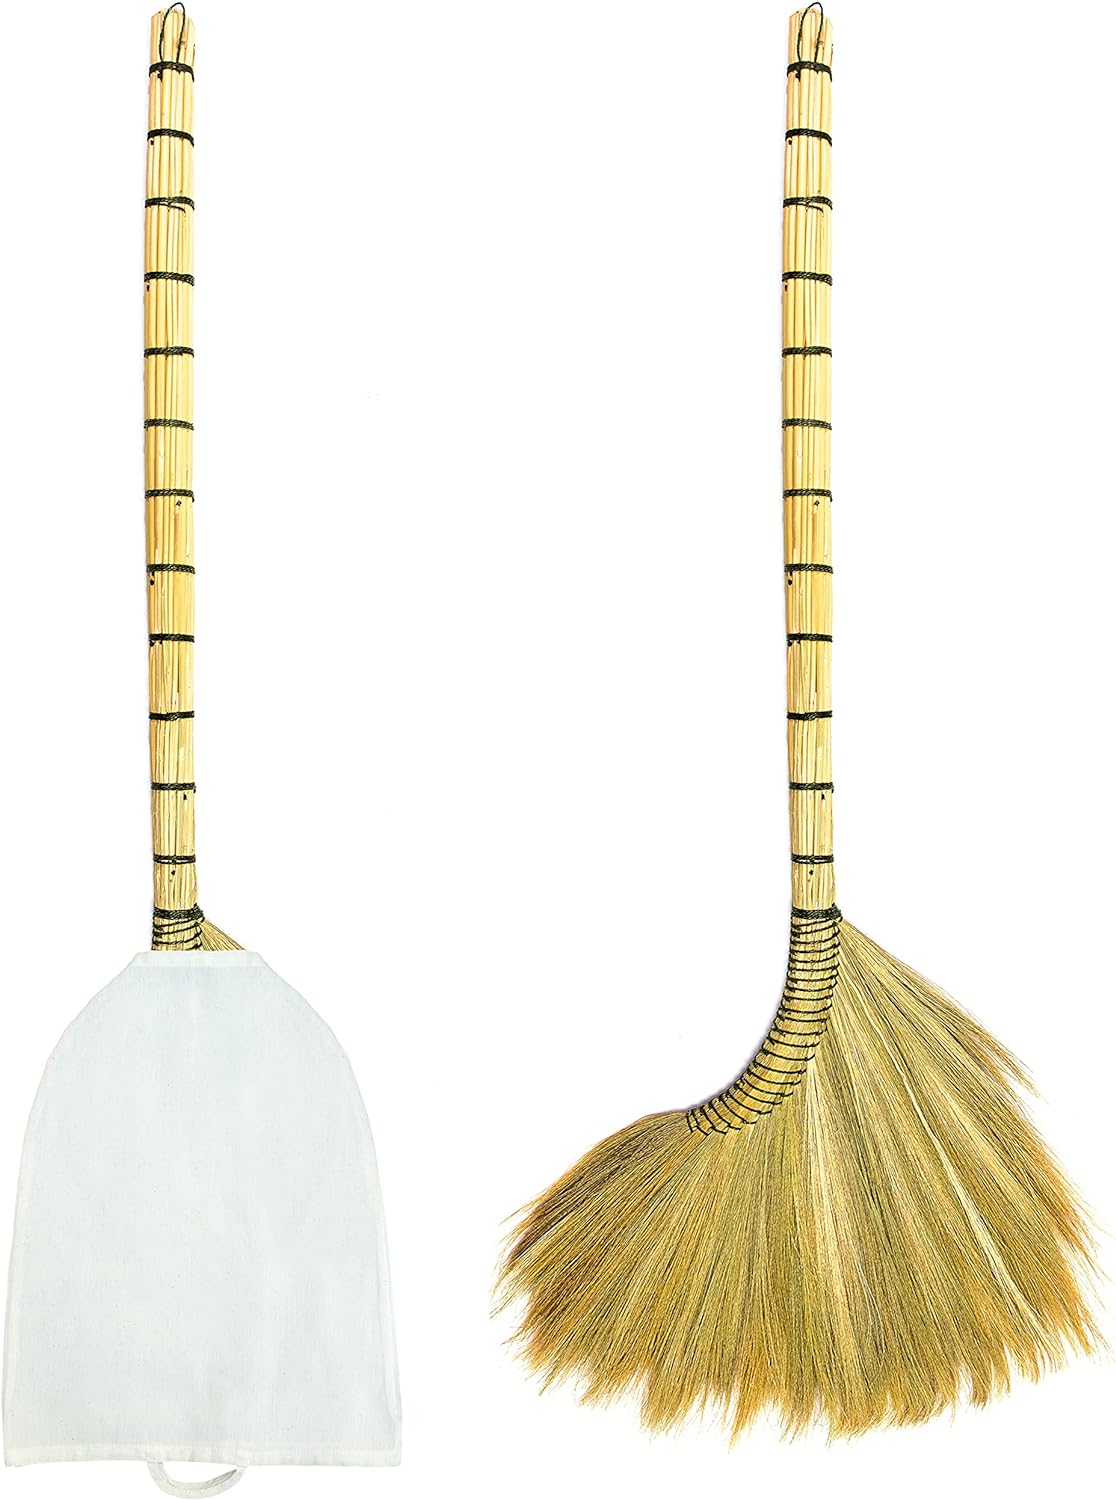 1*Thai Broom Sweep Natural Handmade Straw Dry Grass Soft Plastic Handle 20X24'' 